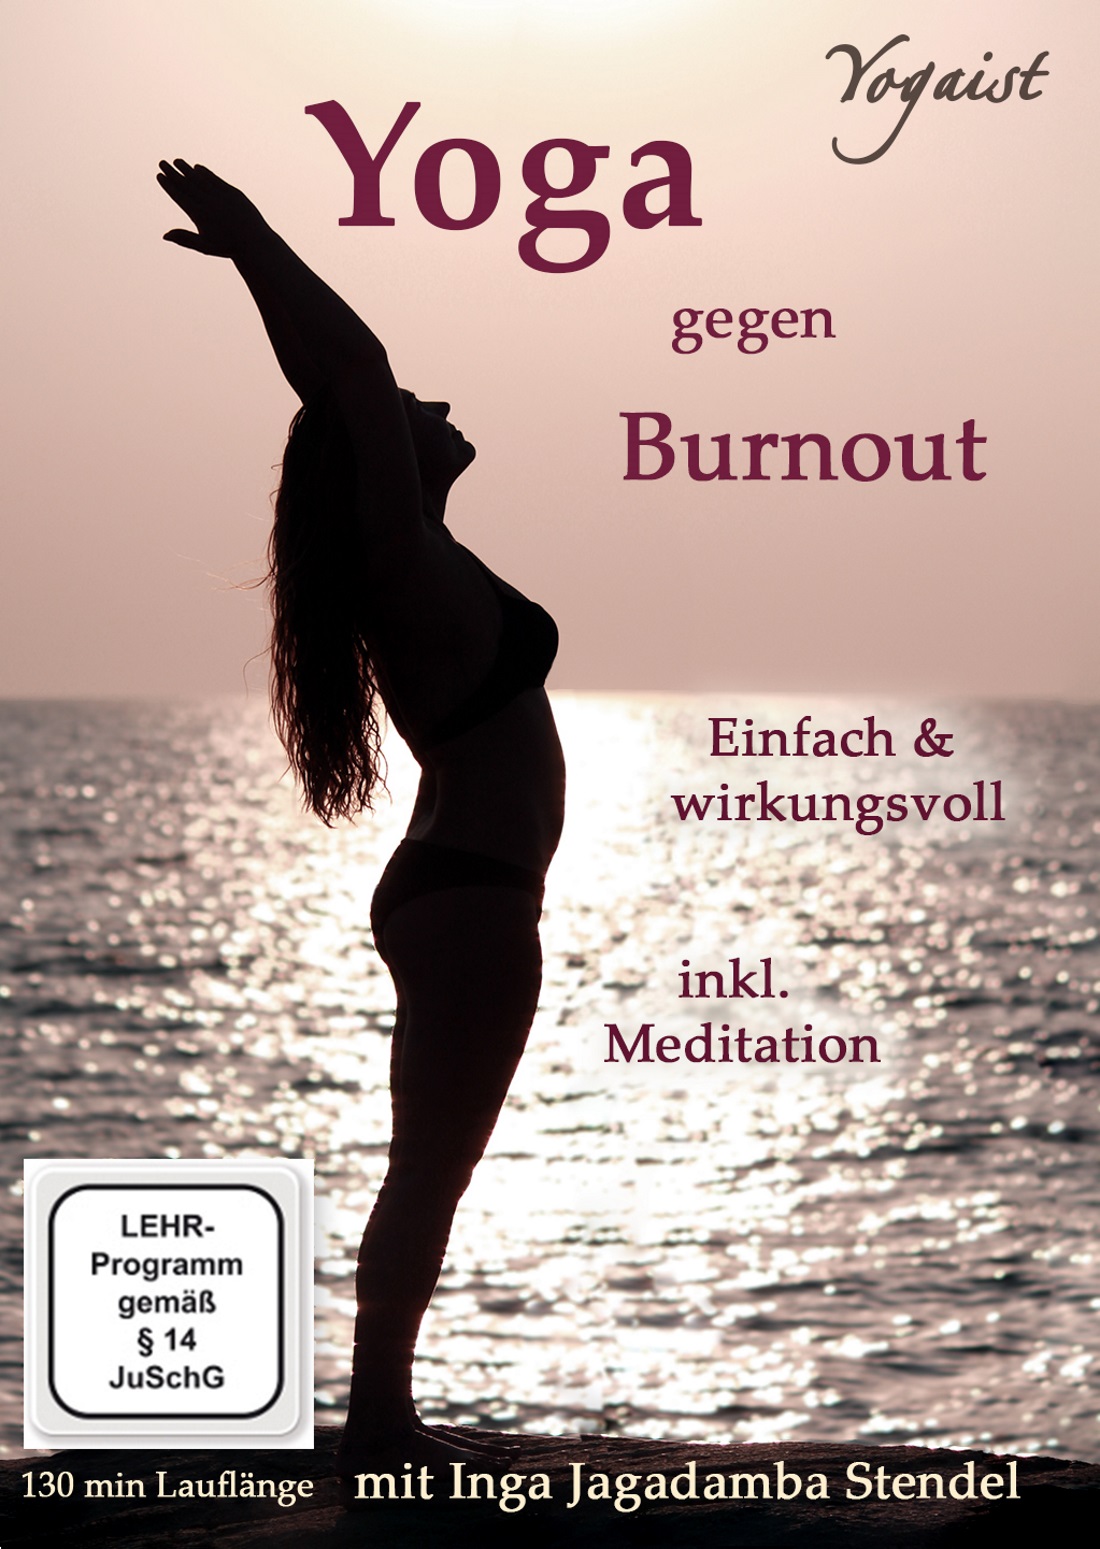 Yogaist Yoga gegen Burnout